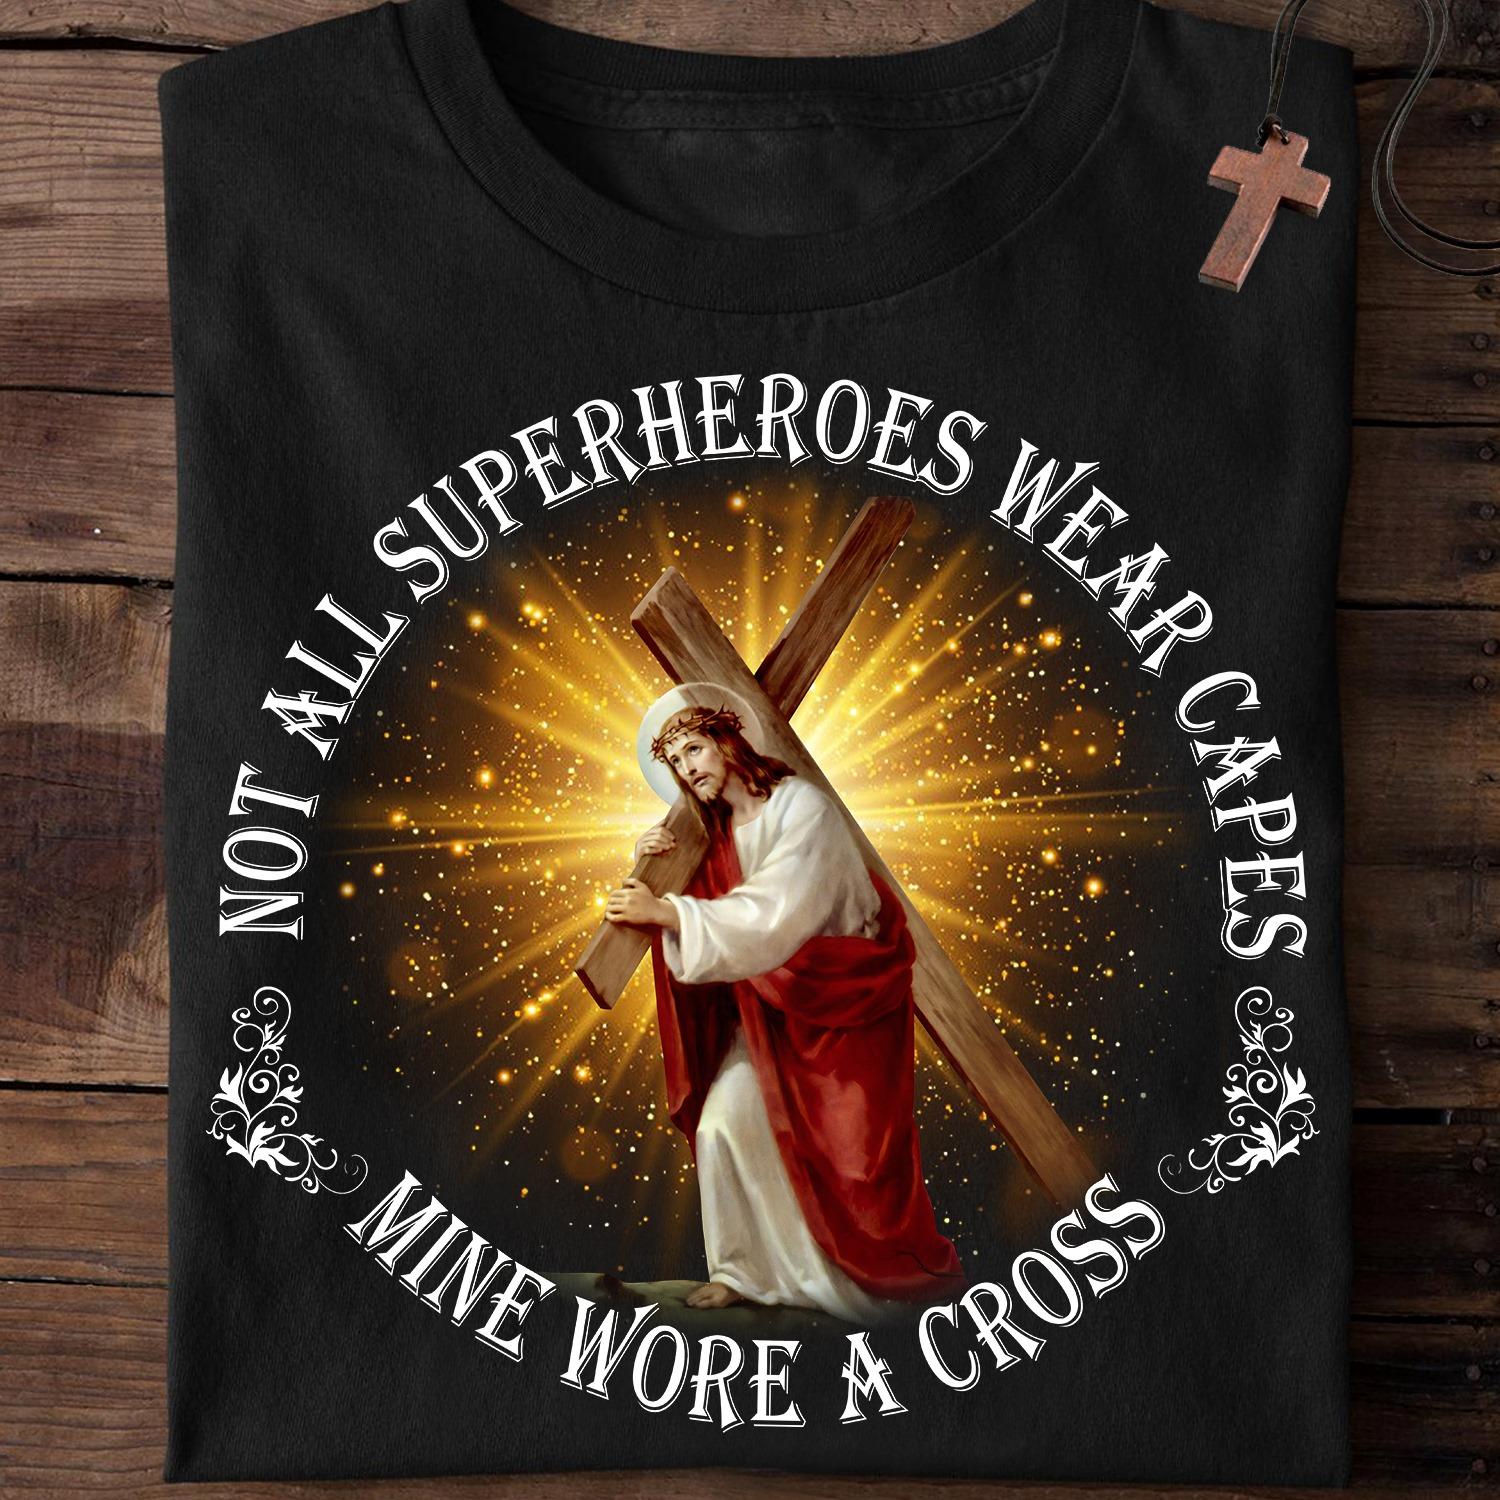 Not all superheroes wear capes mine wore a cross - Jesus the super hero, Believe in Jesus